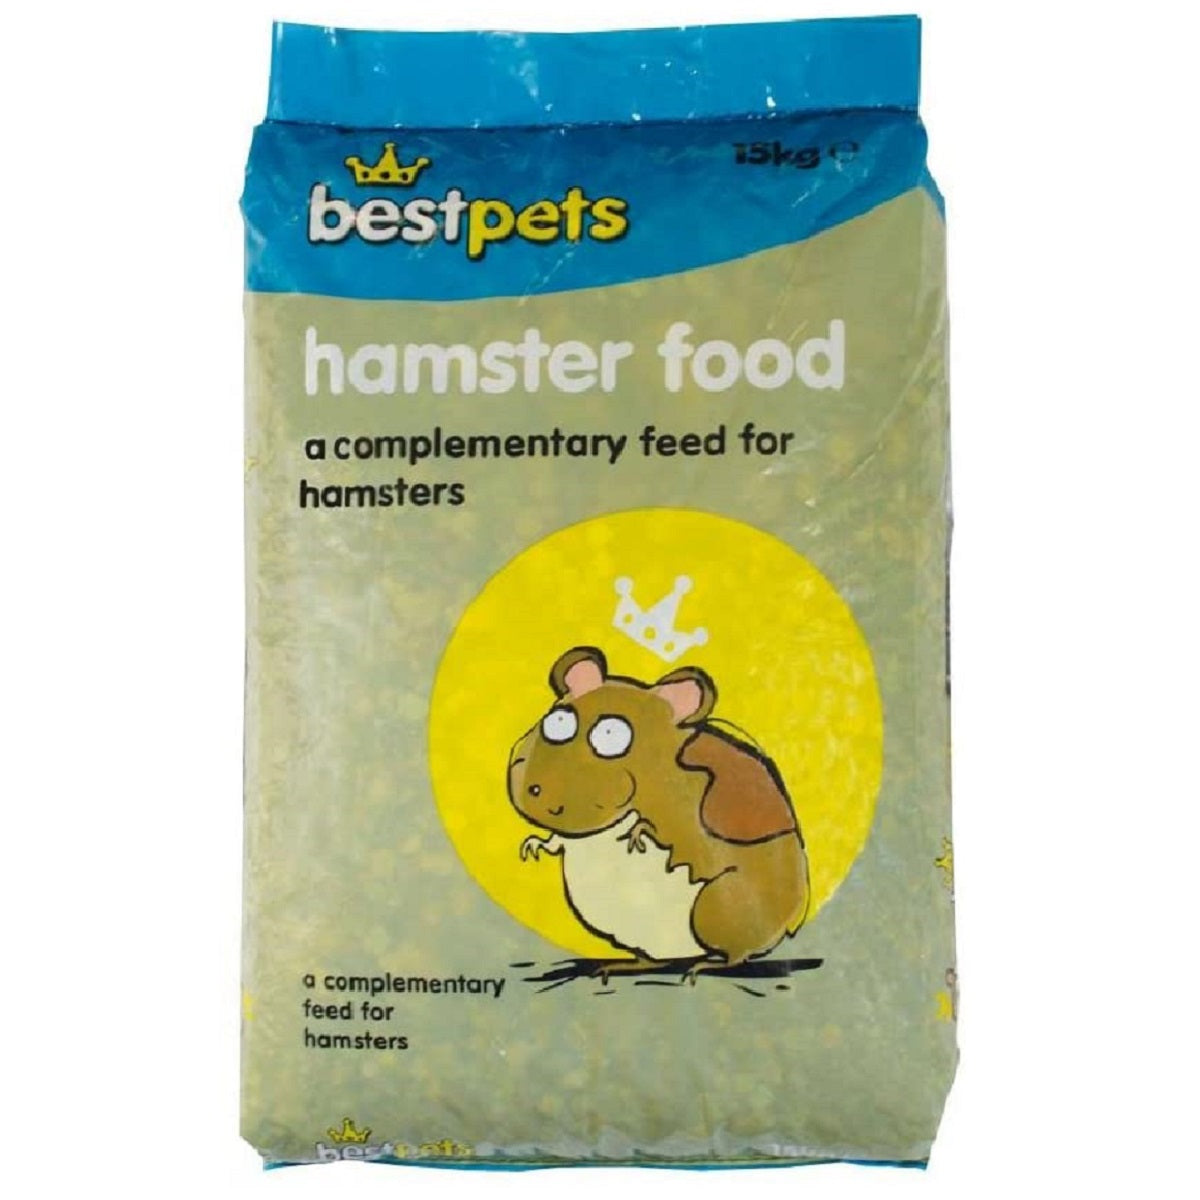 BestPets - Hamster Food